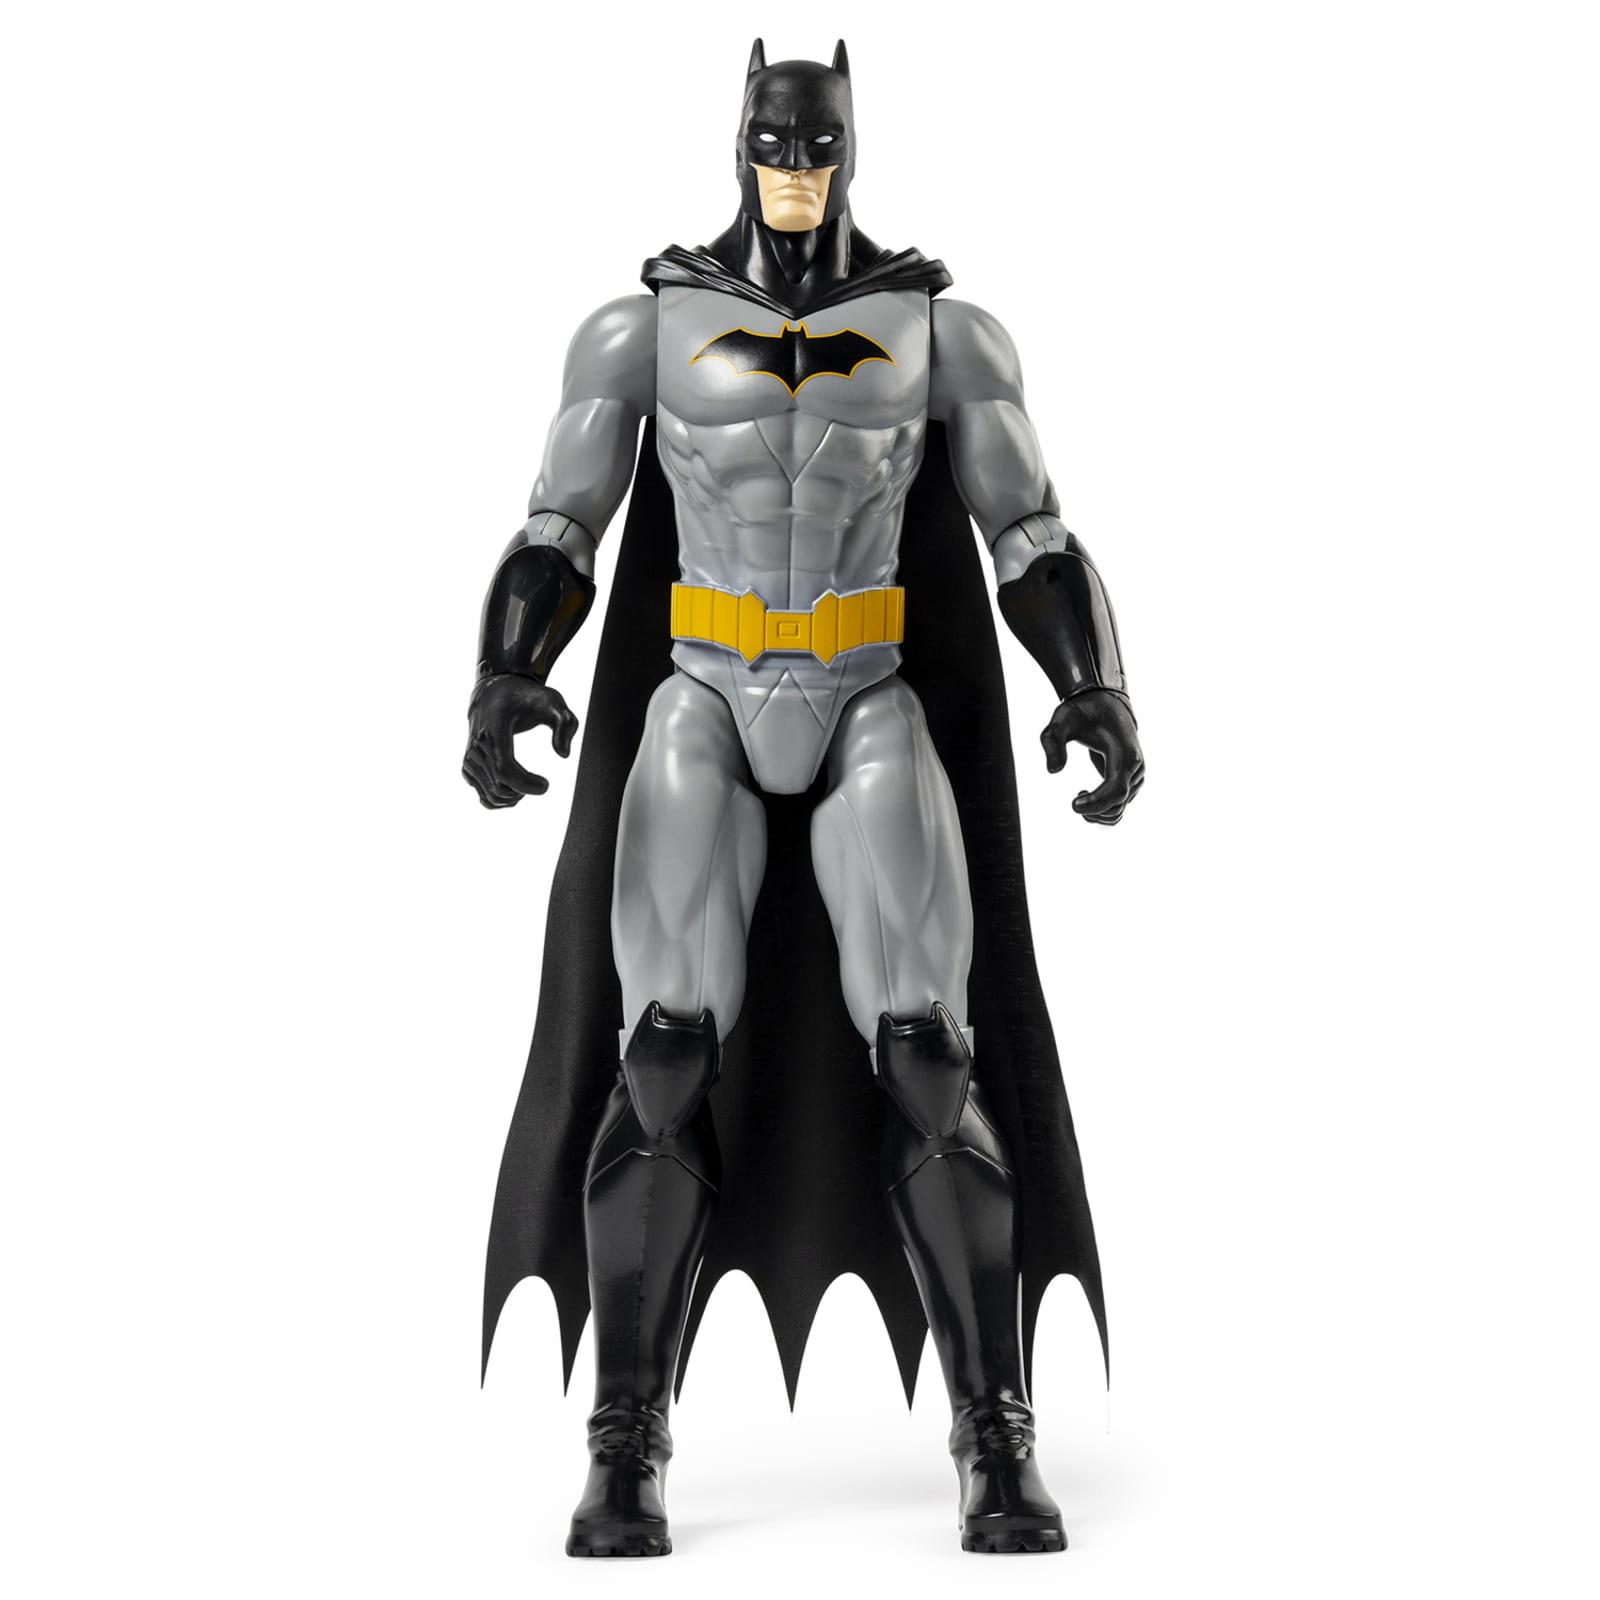 12 in Rebirth Batman Action Figure - Assorted by Batman at Fleet Farm